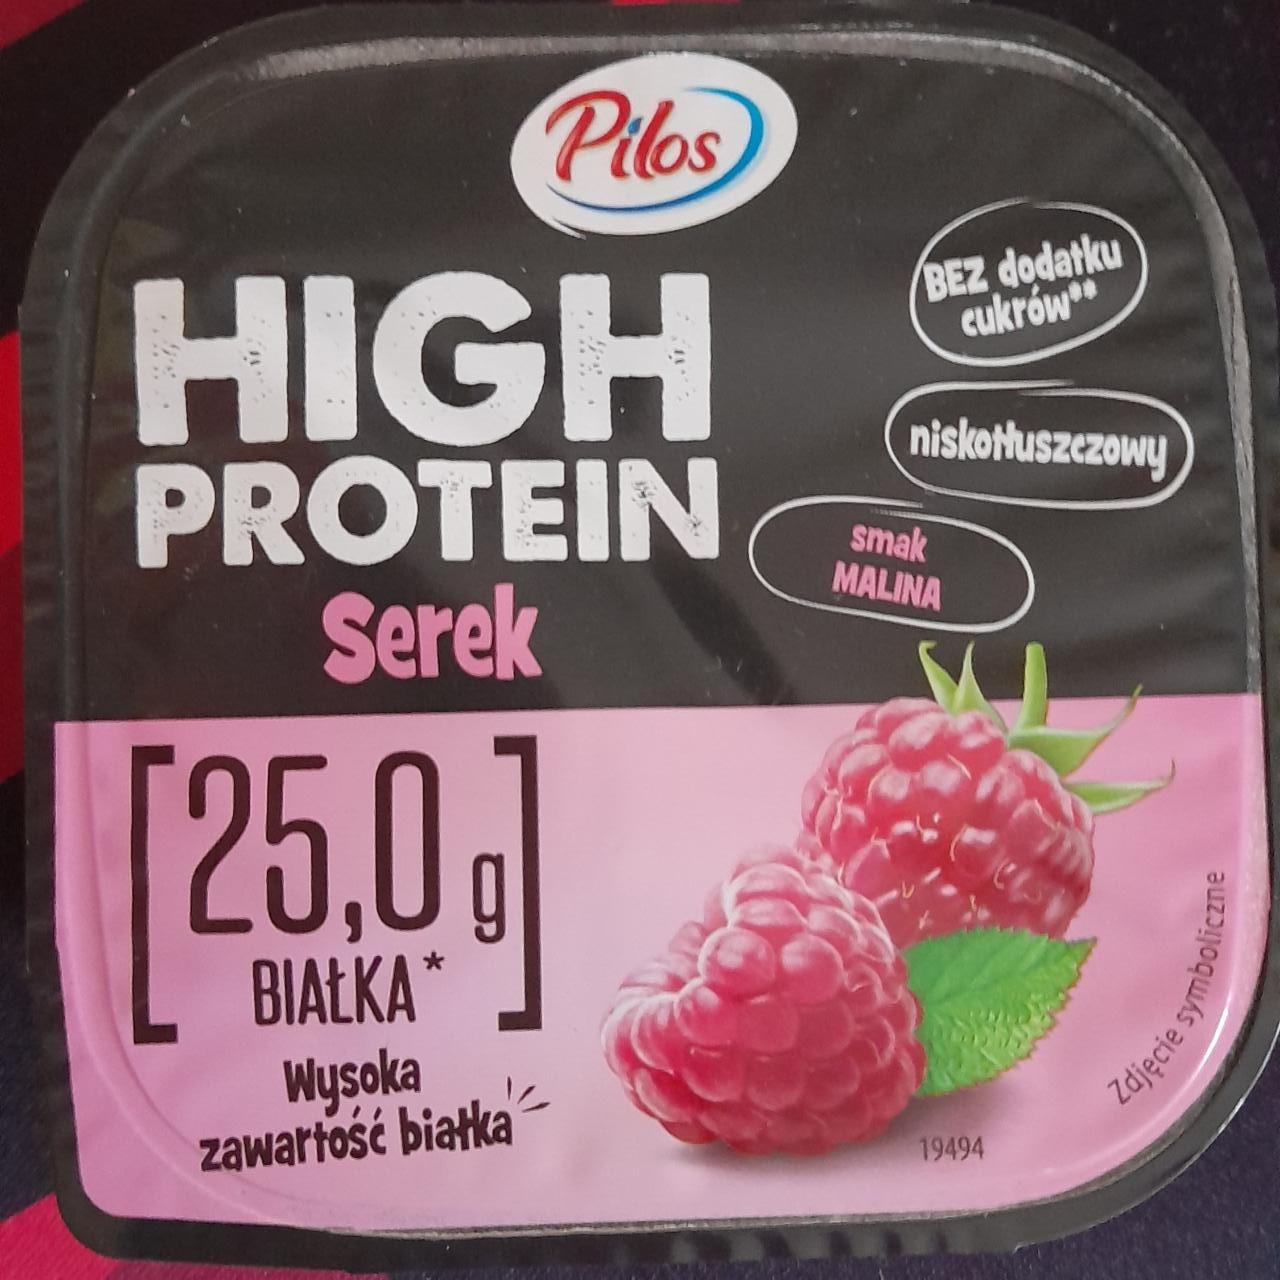 Zdjęcia - High protein serek smak malina Pilos